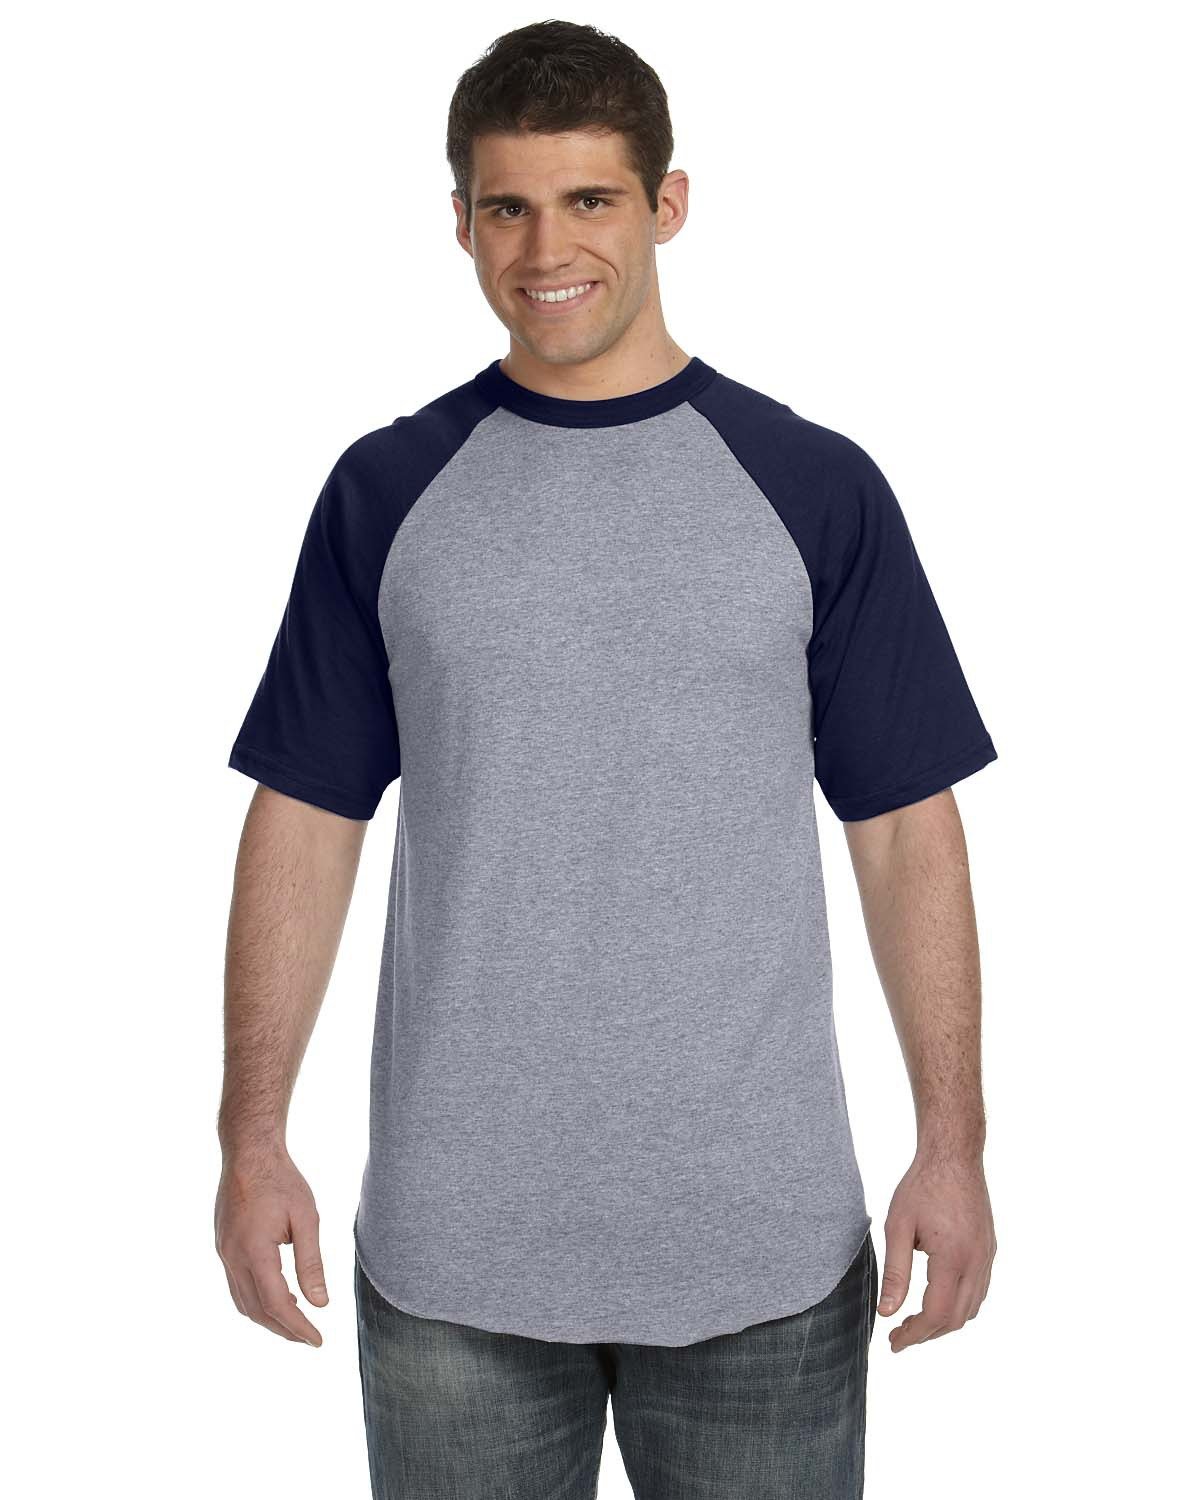 Augusta Sportswear Adult Short-Sleeve Baseball Jersey ATH HTHR/ NAVY 